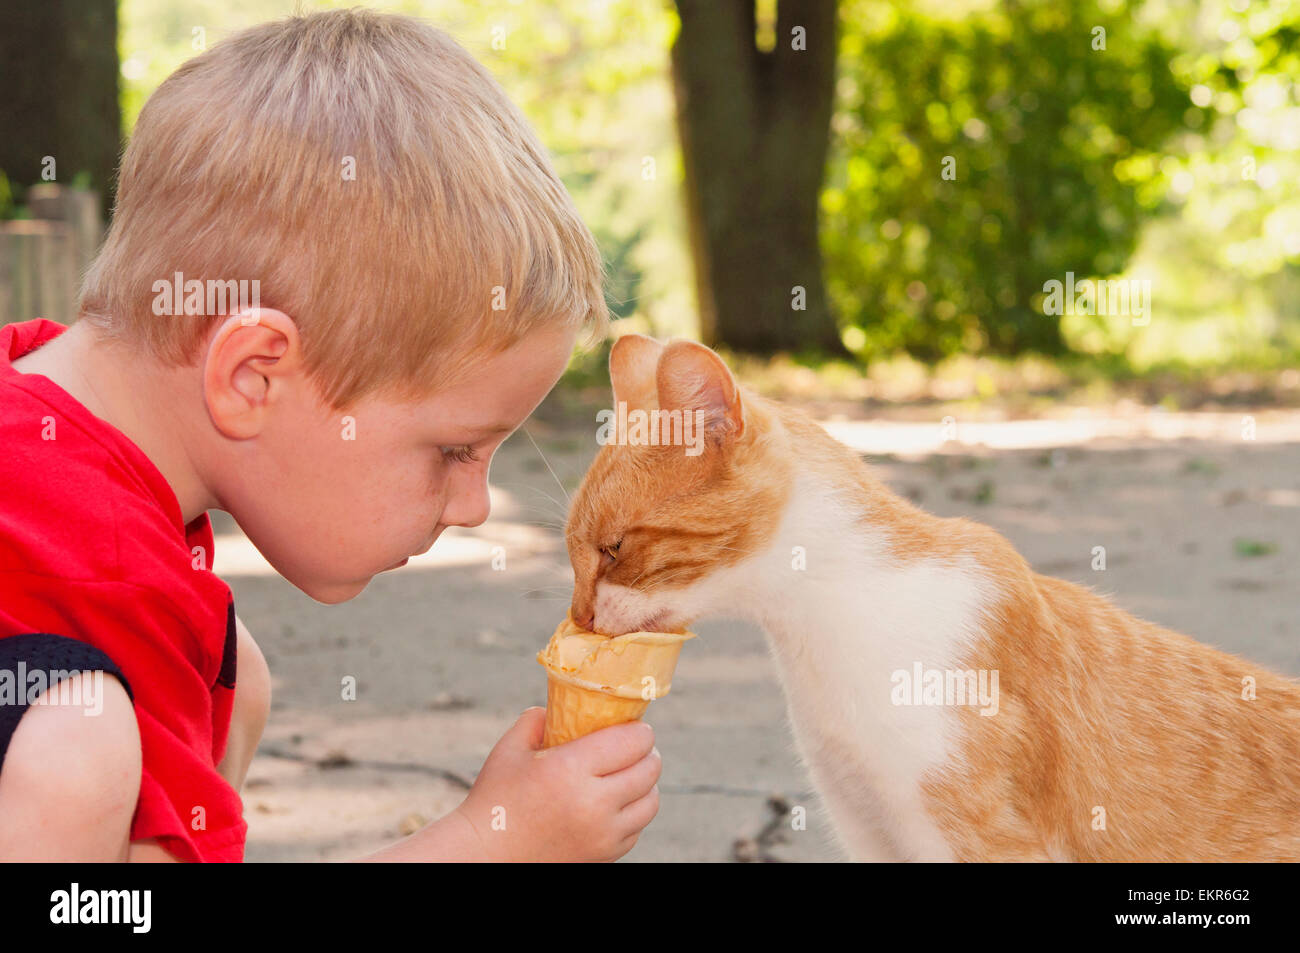 Child feeding cat his ice-cream cone Stock Photo